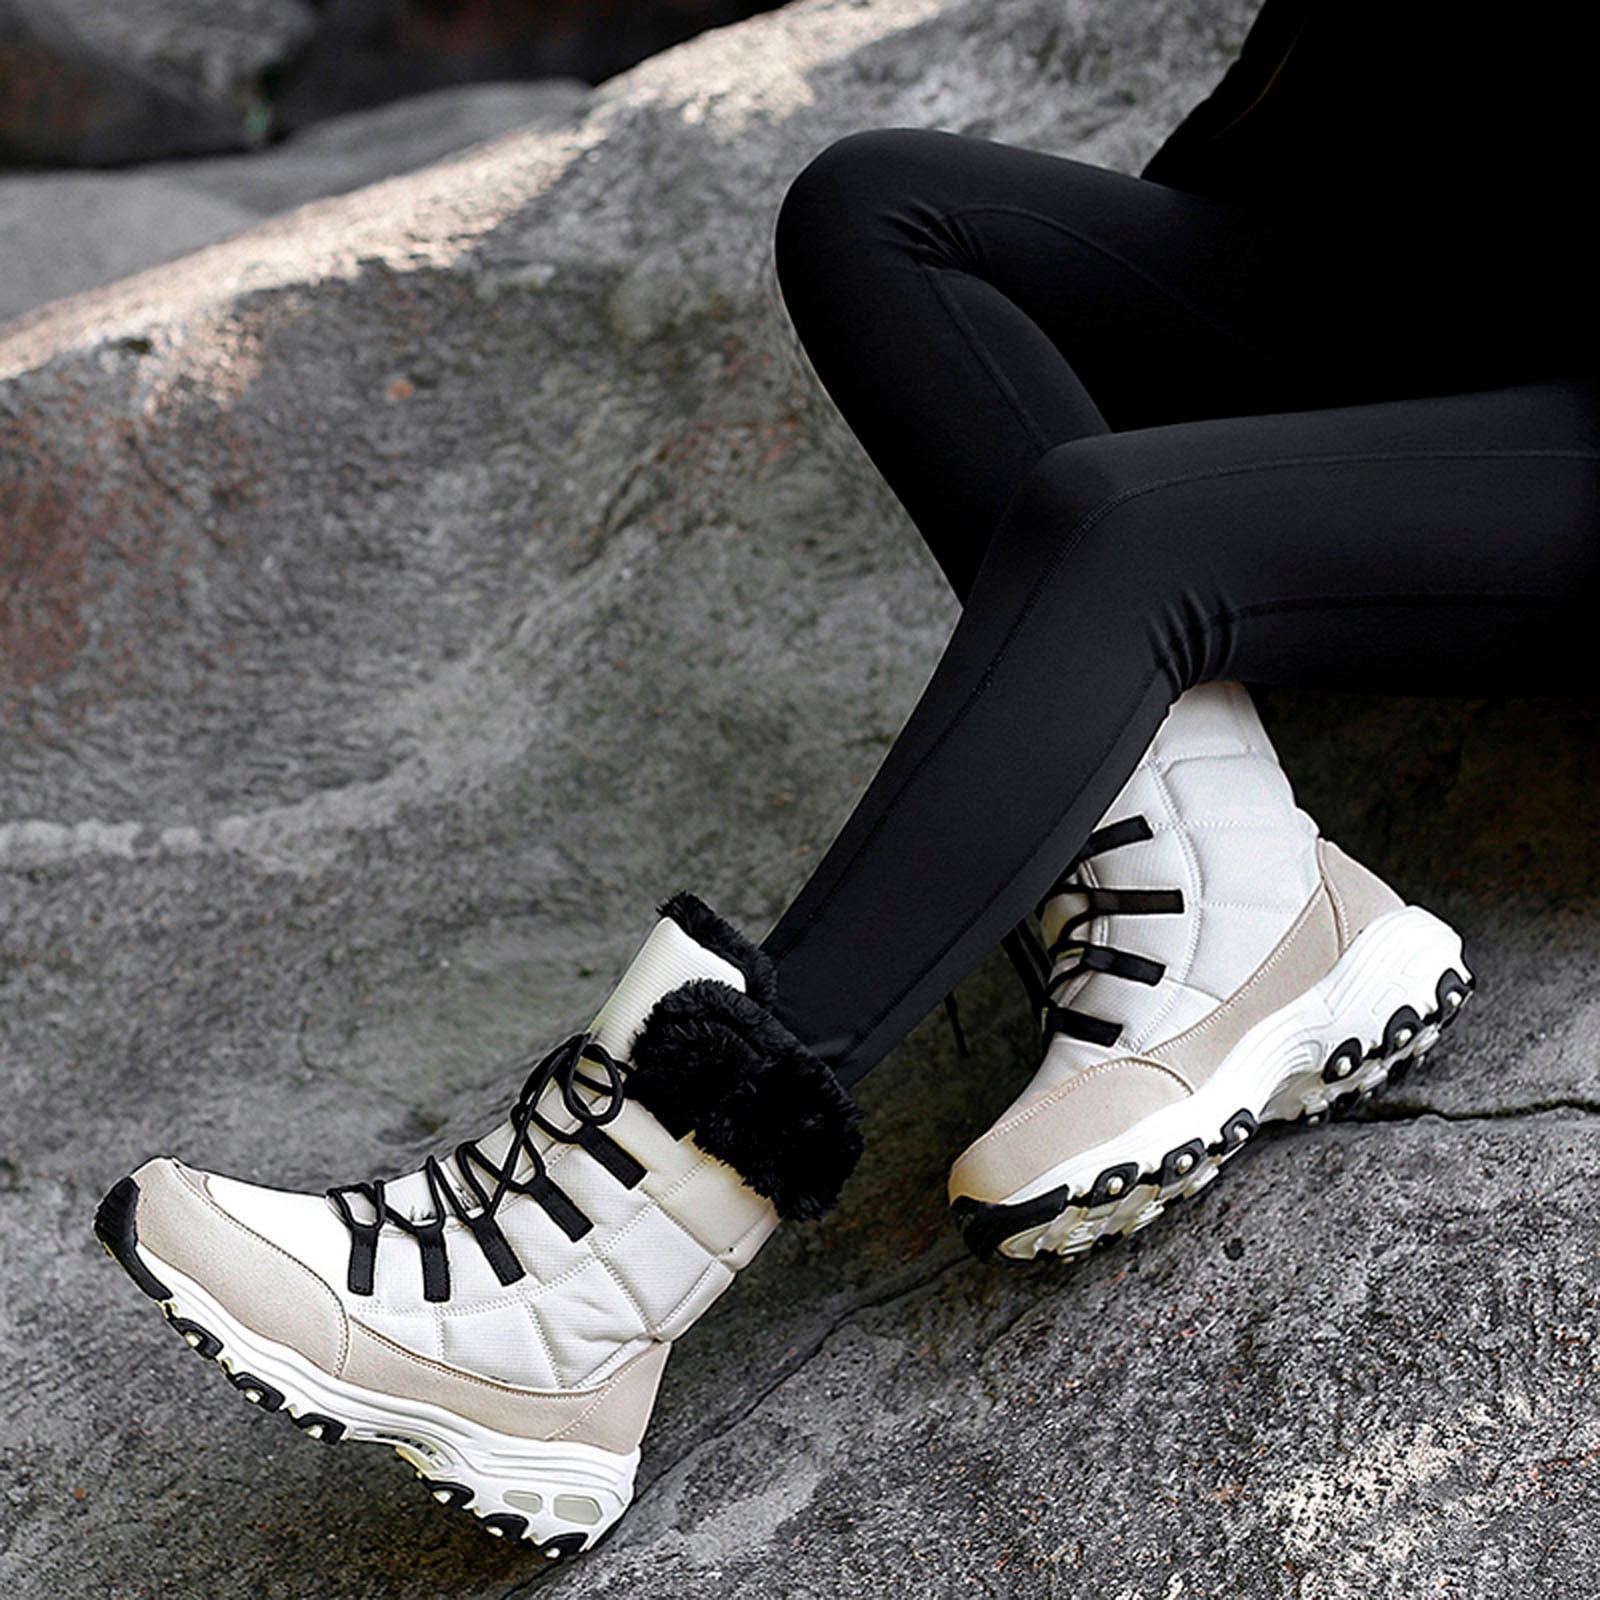 Juebong Boots on Sale 2022 Lug Sole Non-Slip Mid-Tube Women Mid